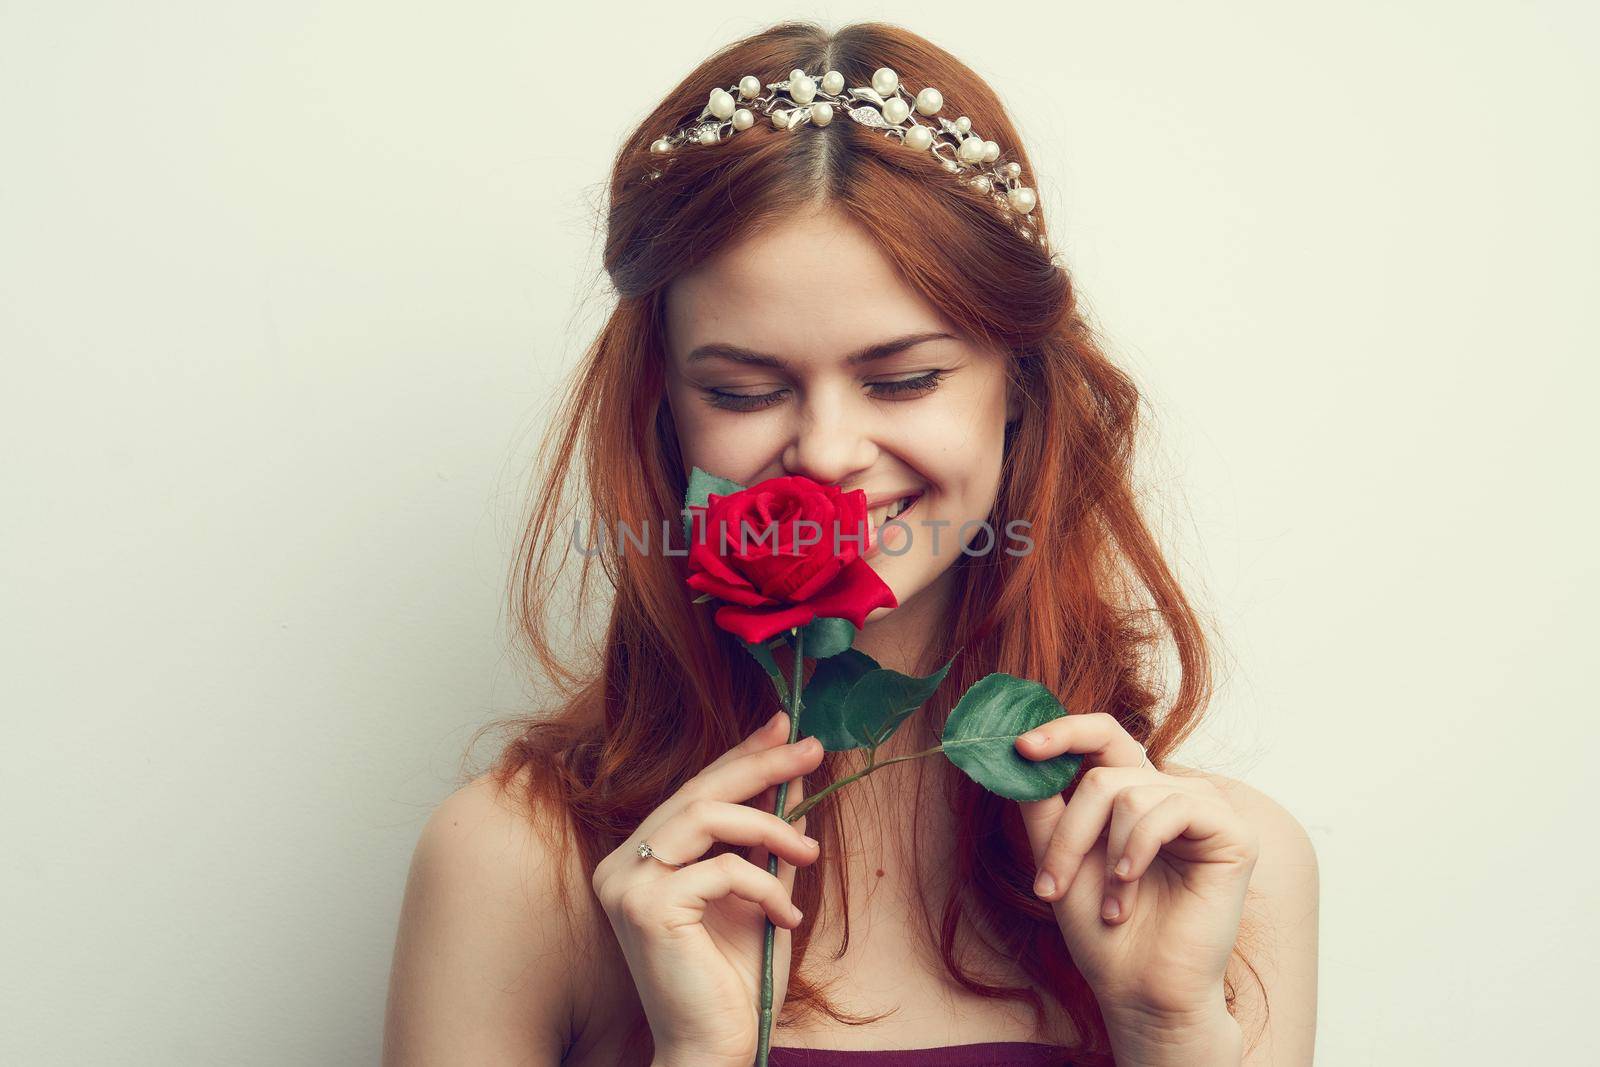 cheerful woman fashion hairstyle rose flower charm romance. High quality photo